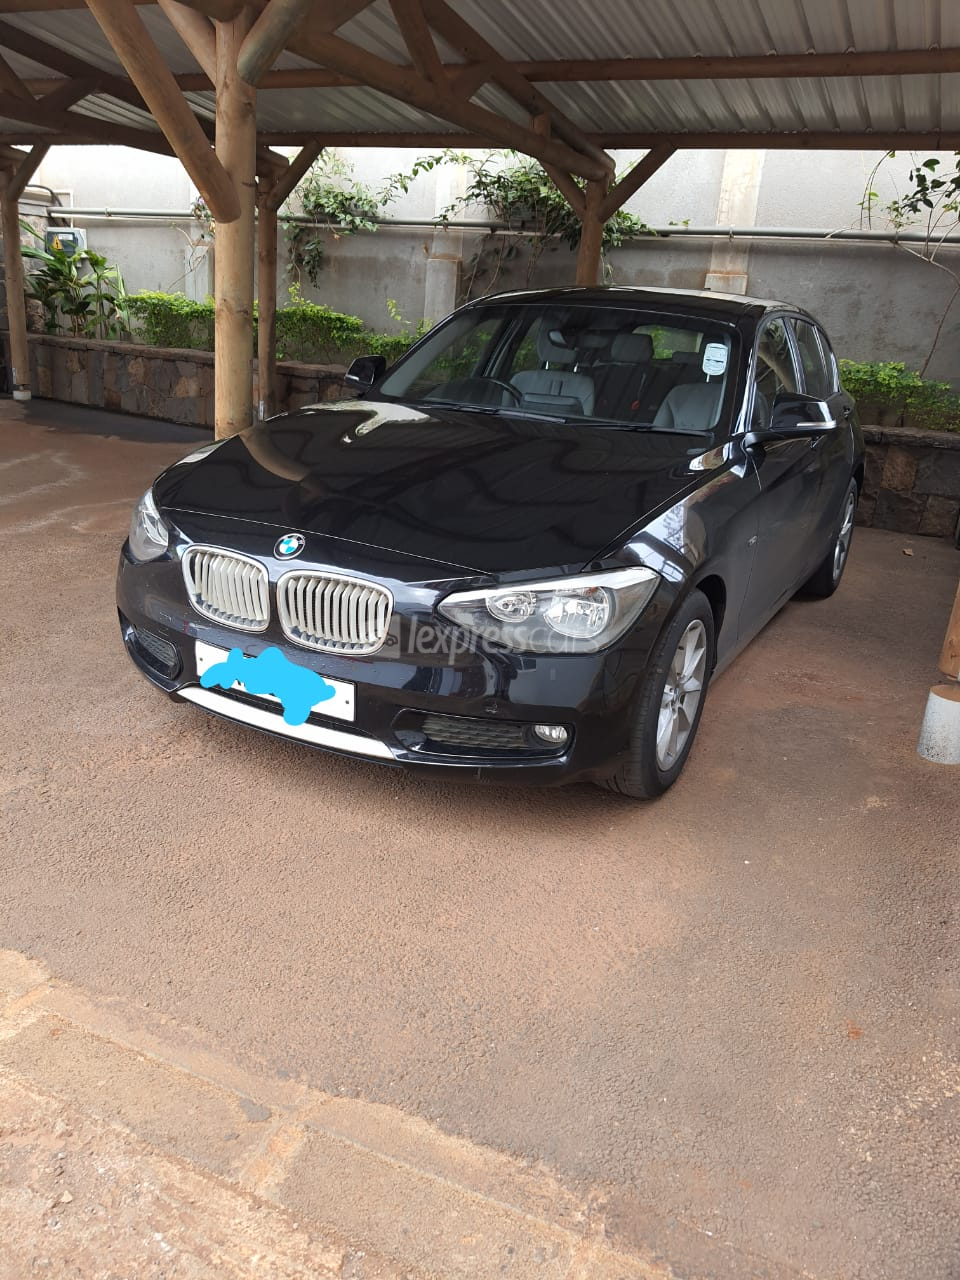 SecondHand BMW 116i 2015 lexpresscars.mu